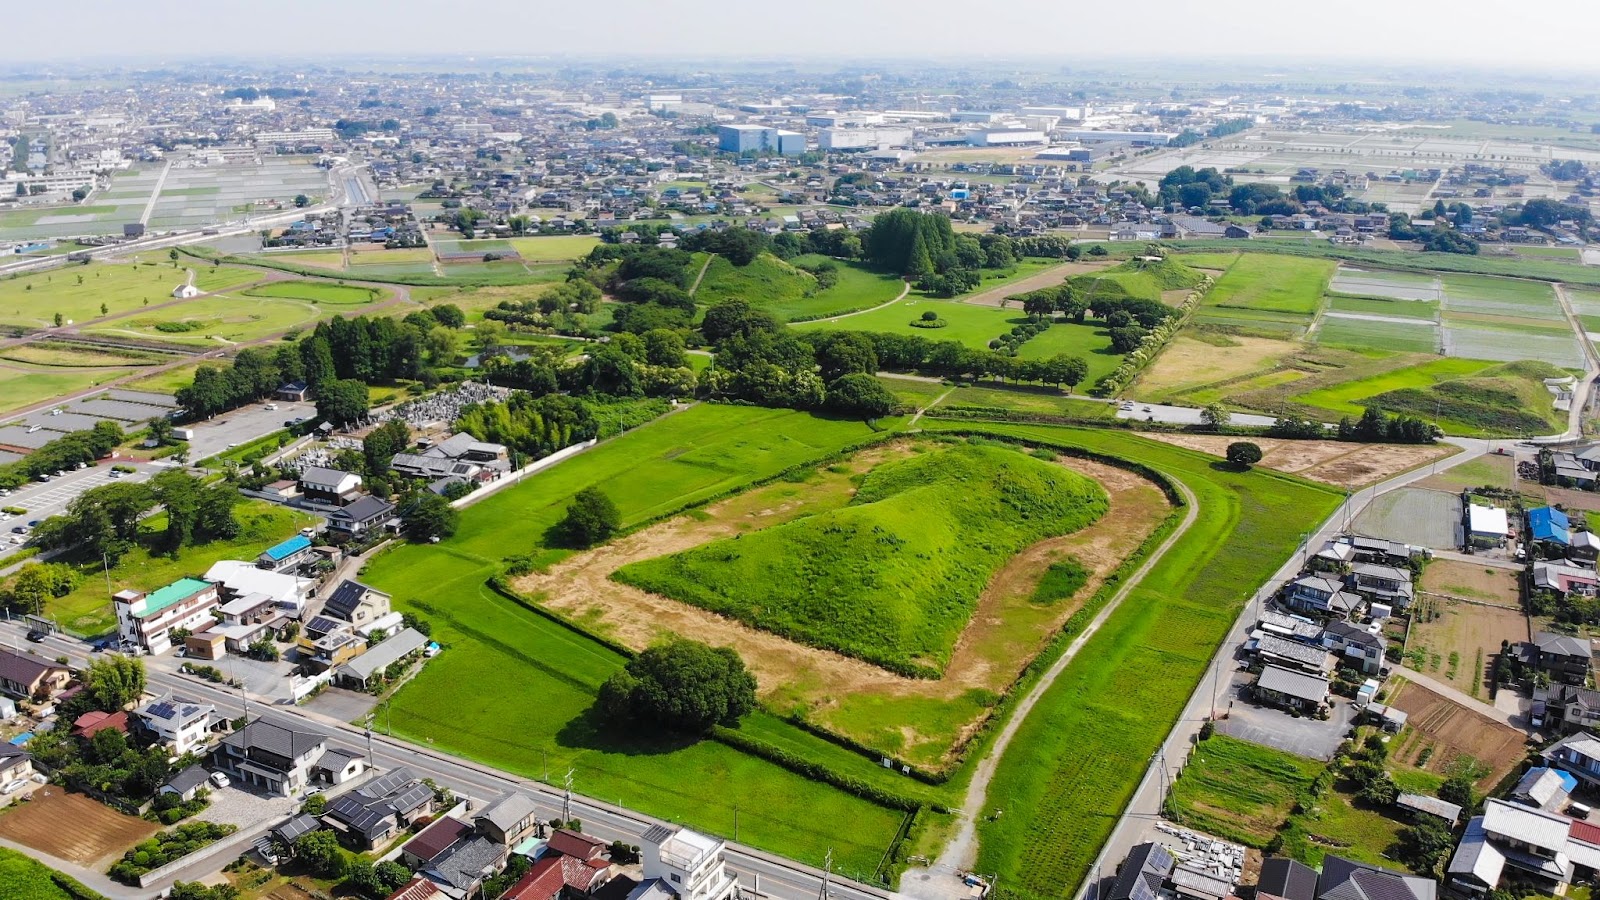 Kofun Era mound tombs and keyhole shaped tombs